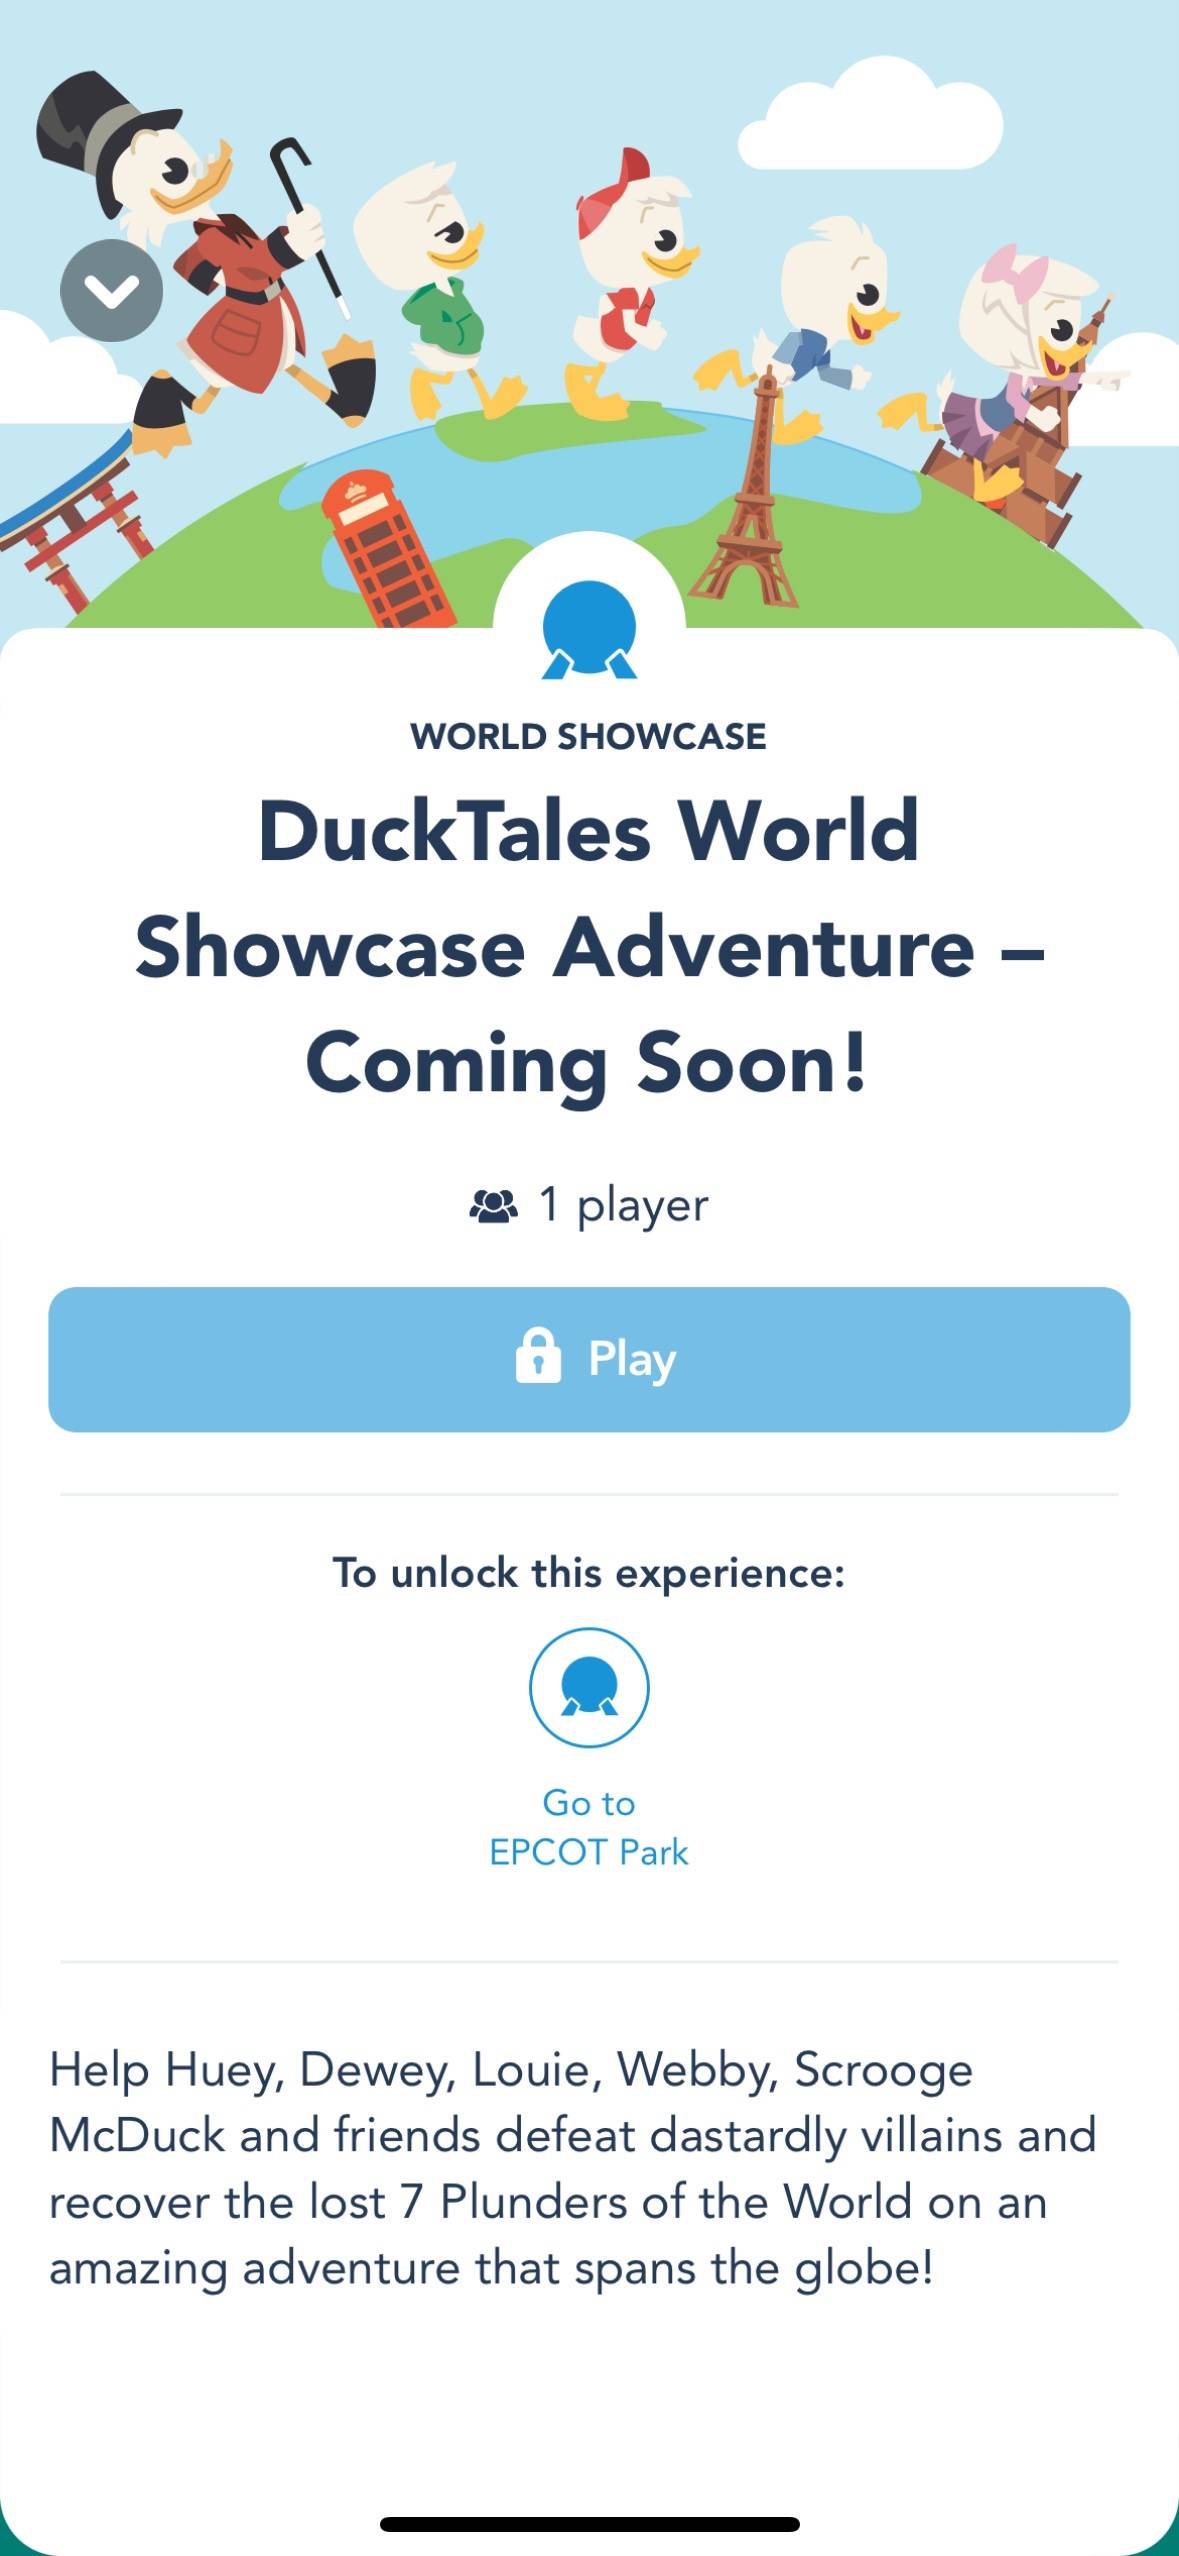 Opening date set for Disney's DuckTales World Showcase Adventure at Walt Disney World's EPCOT